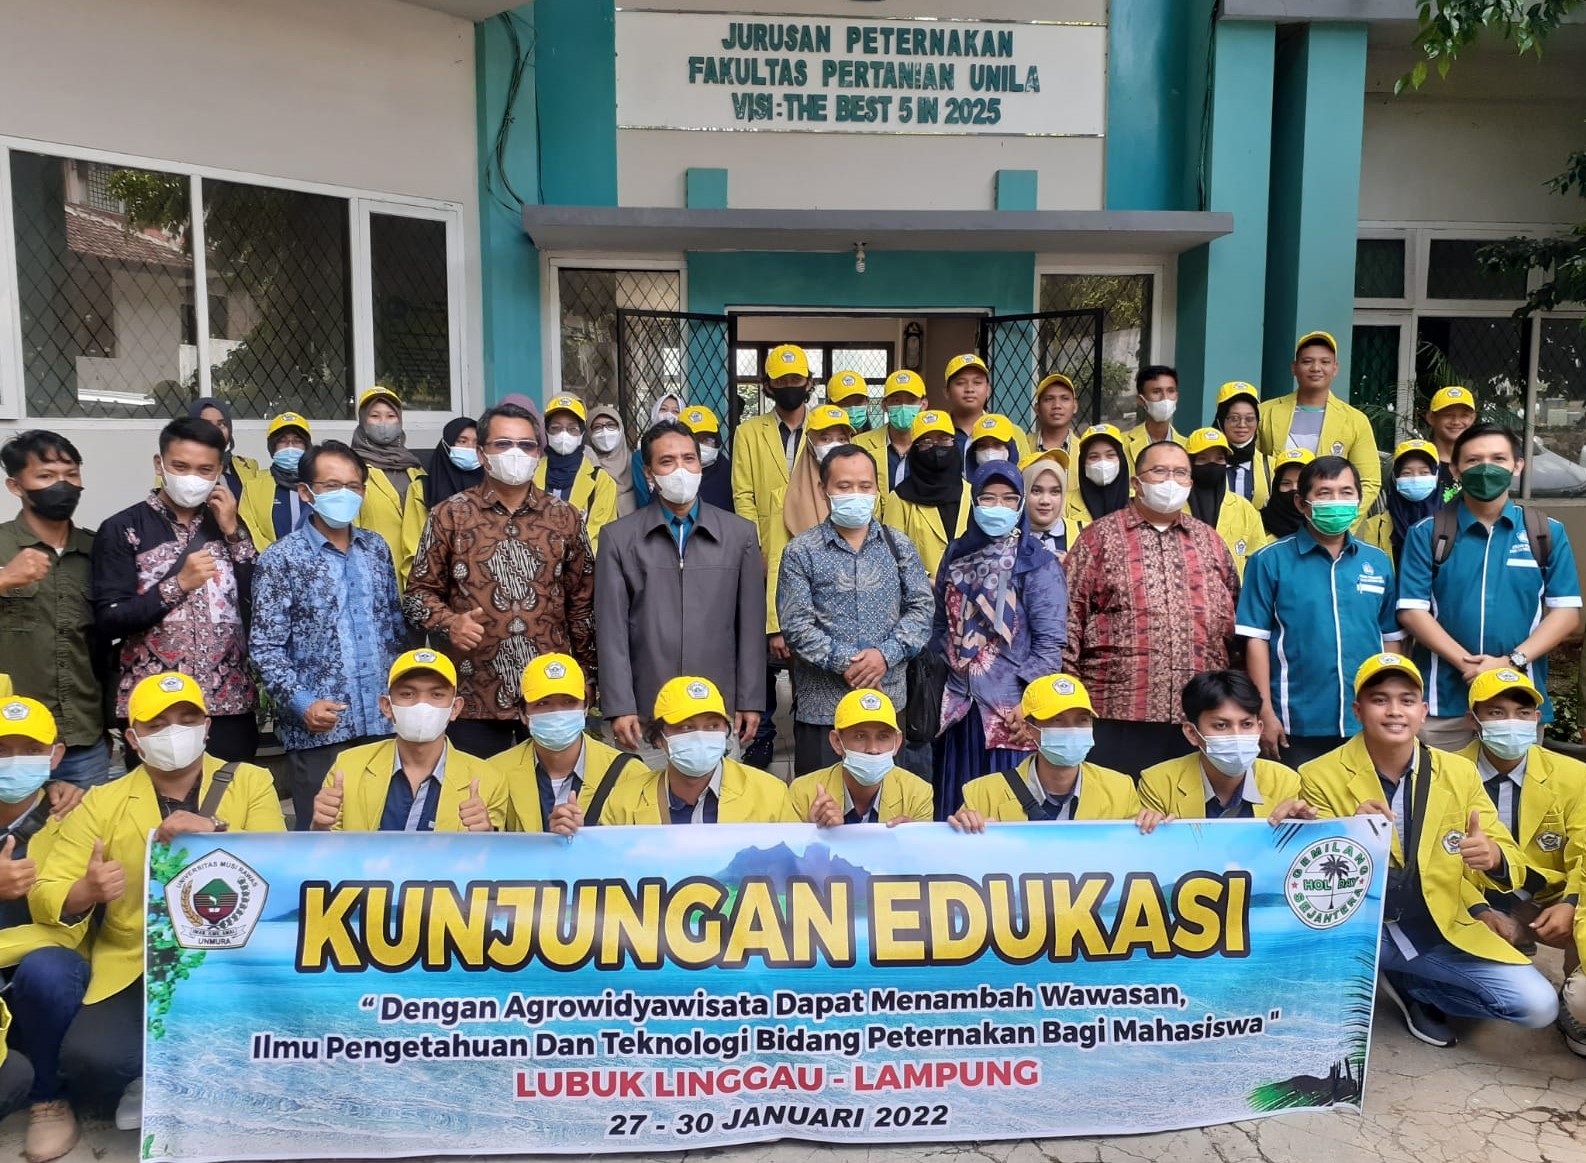 Kunjungan Edukasi Universitas Musi Rawas di Jurusan Peternakan FP Unila